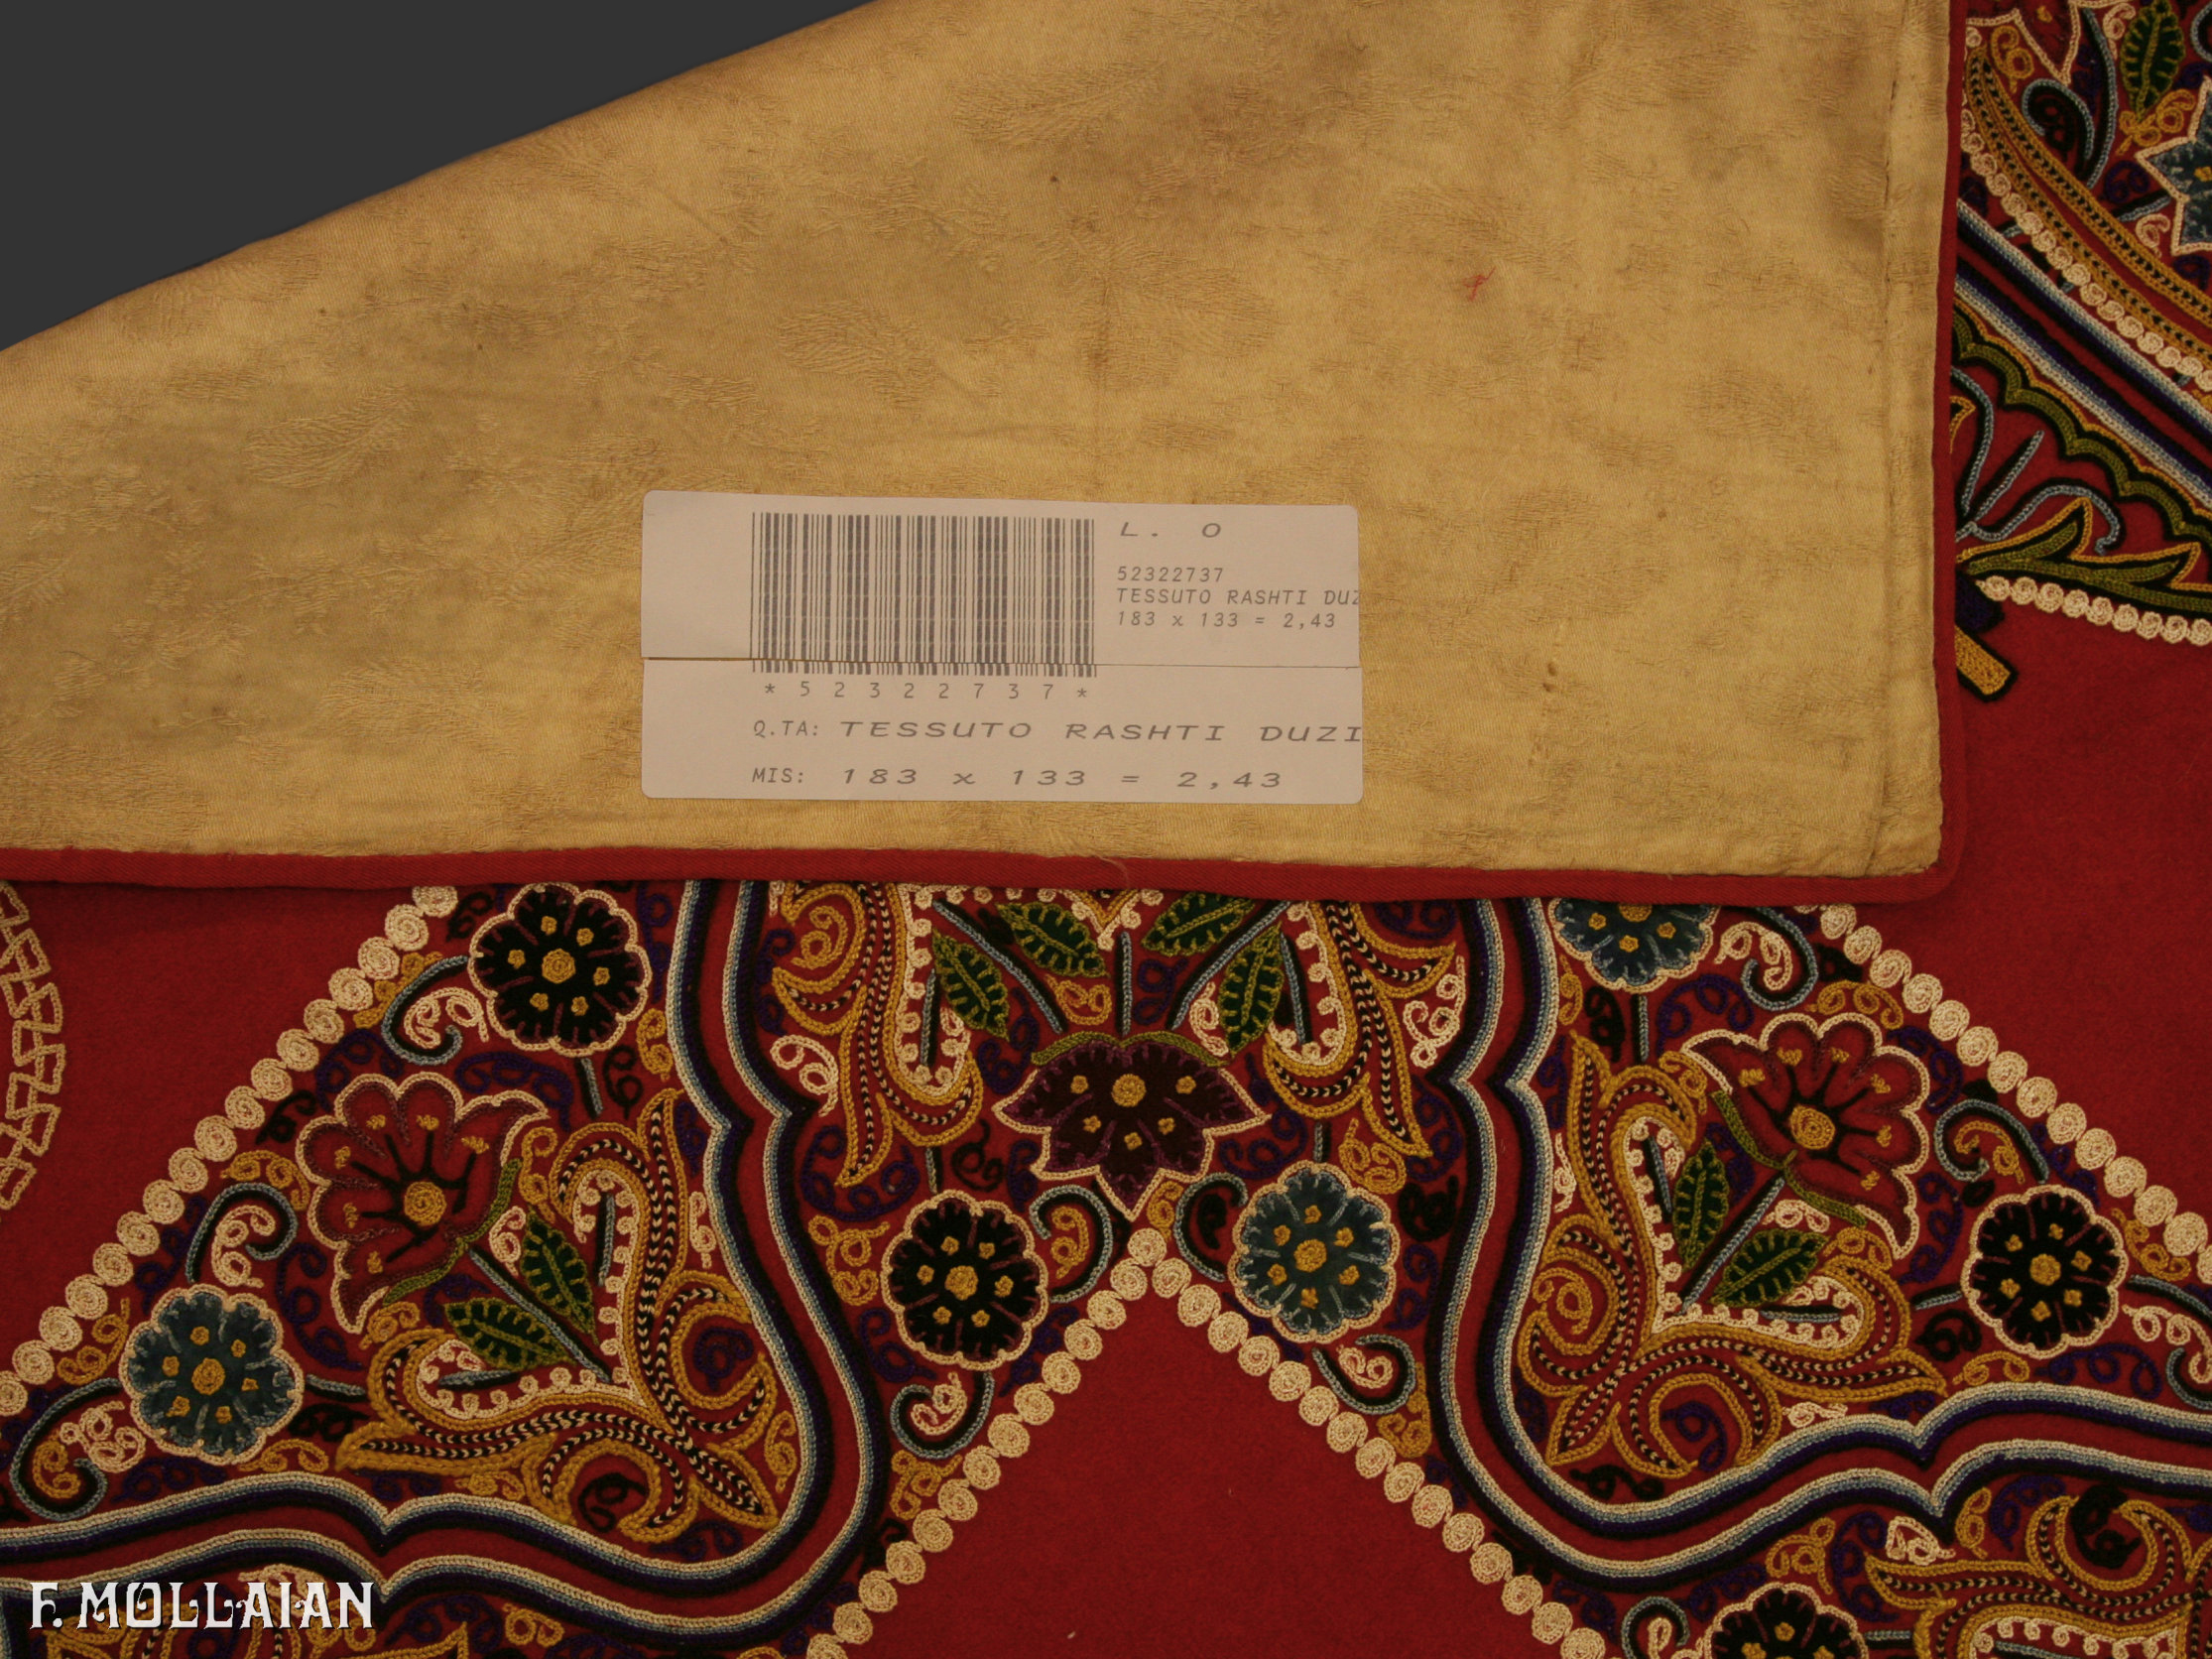 Textil Persischer Antiker Rashti-Duzi n°:52322737